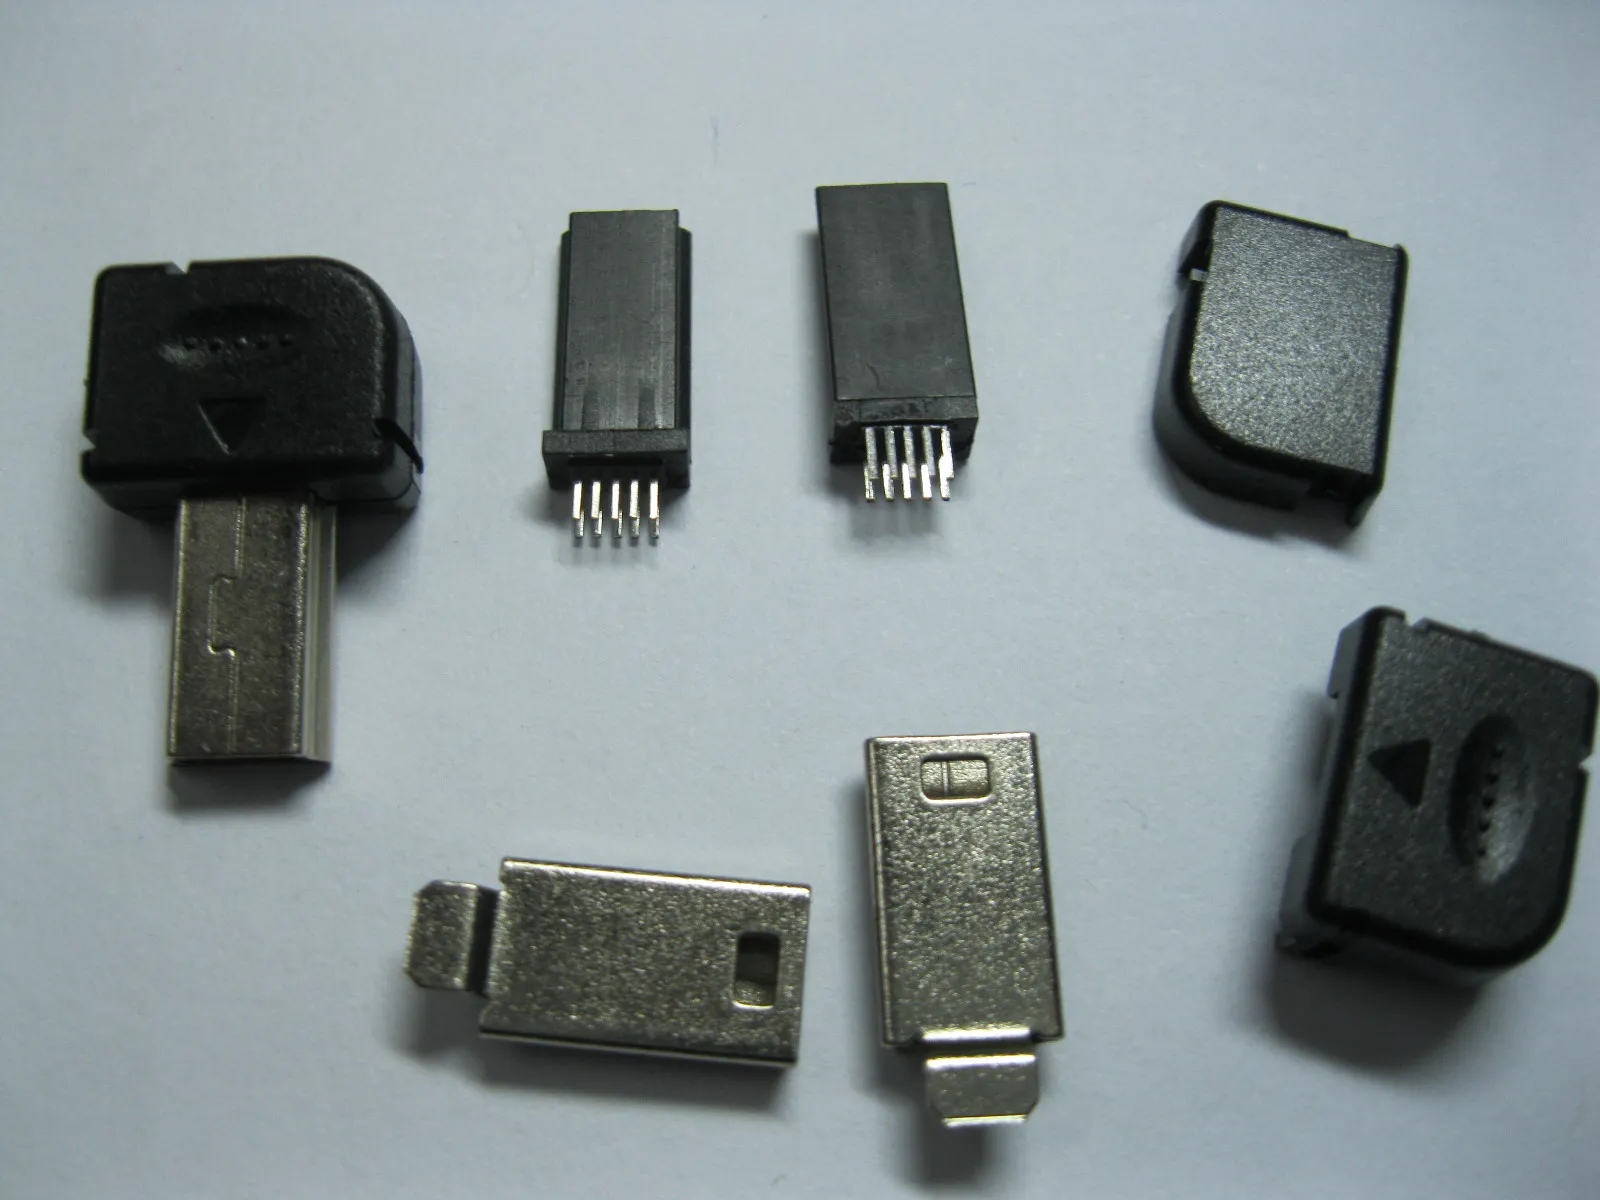 Mini 10 Pin USB Male Plug For Philips Right Angle 300 pcs per lot hot sale